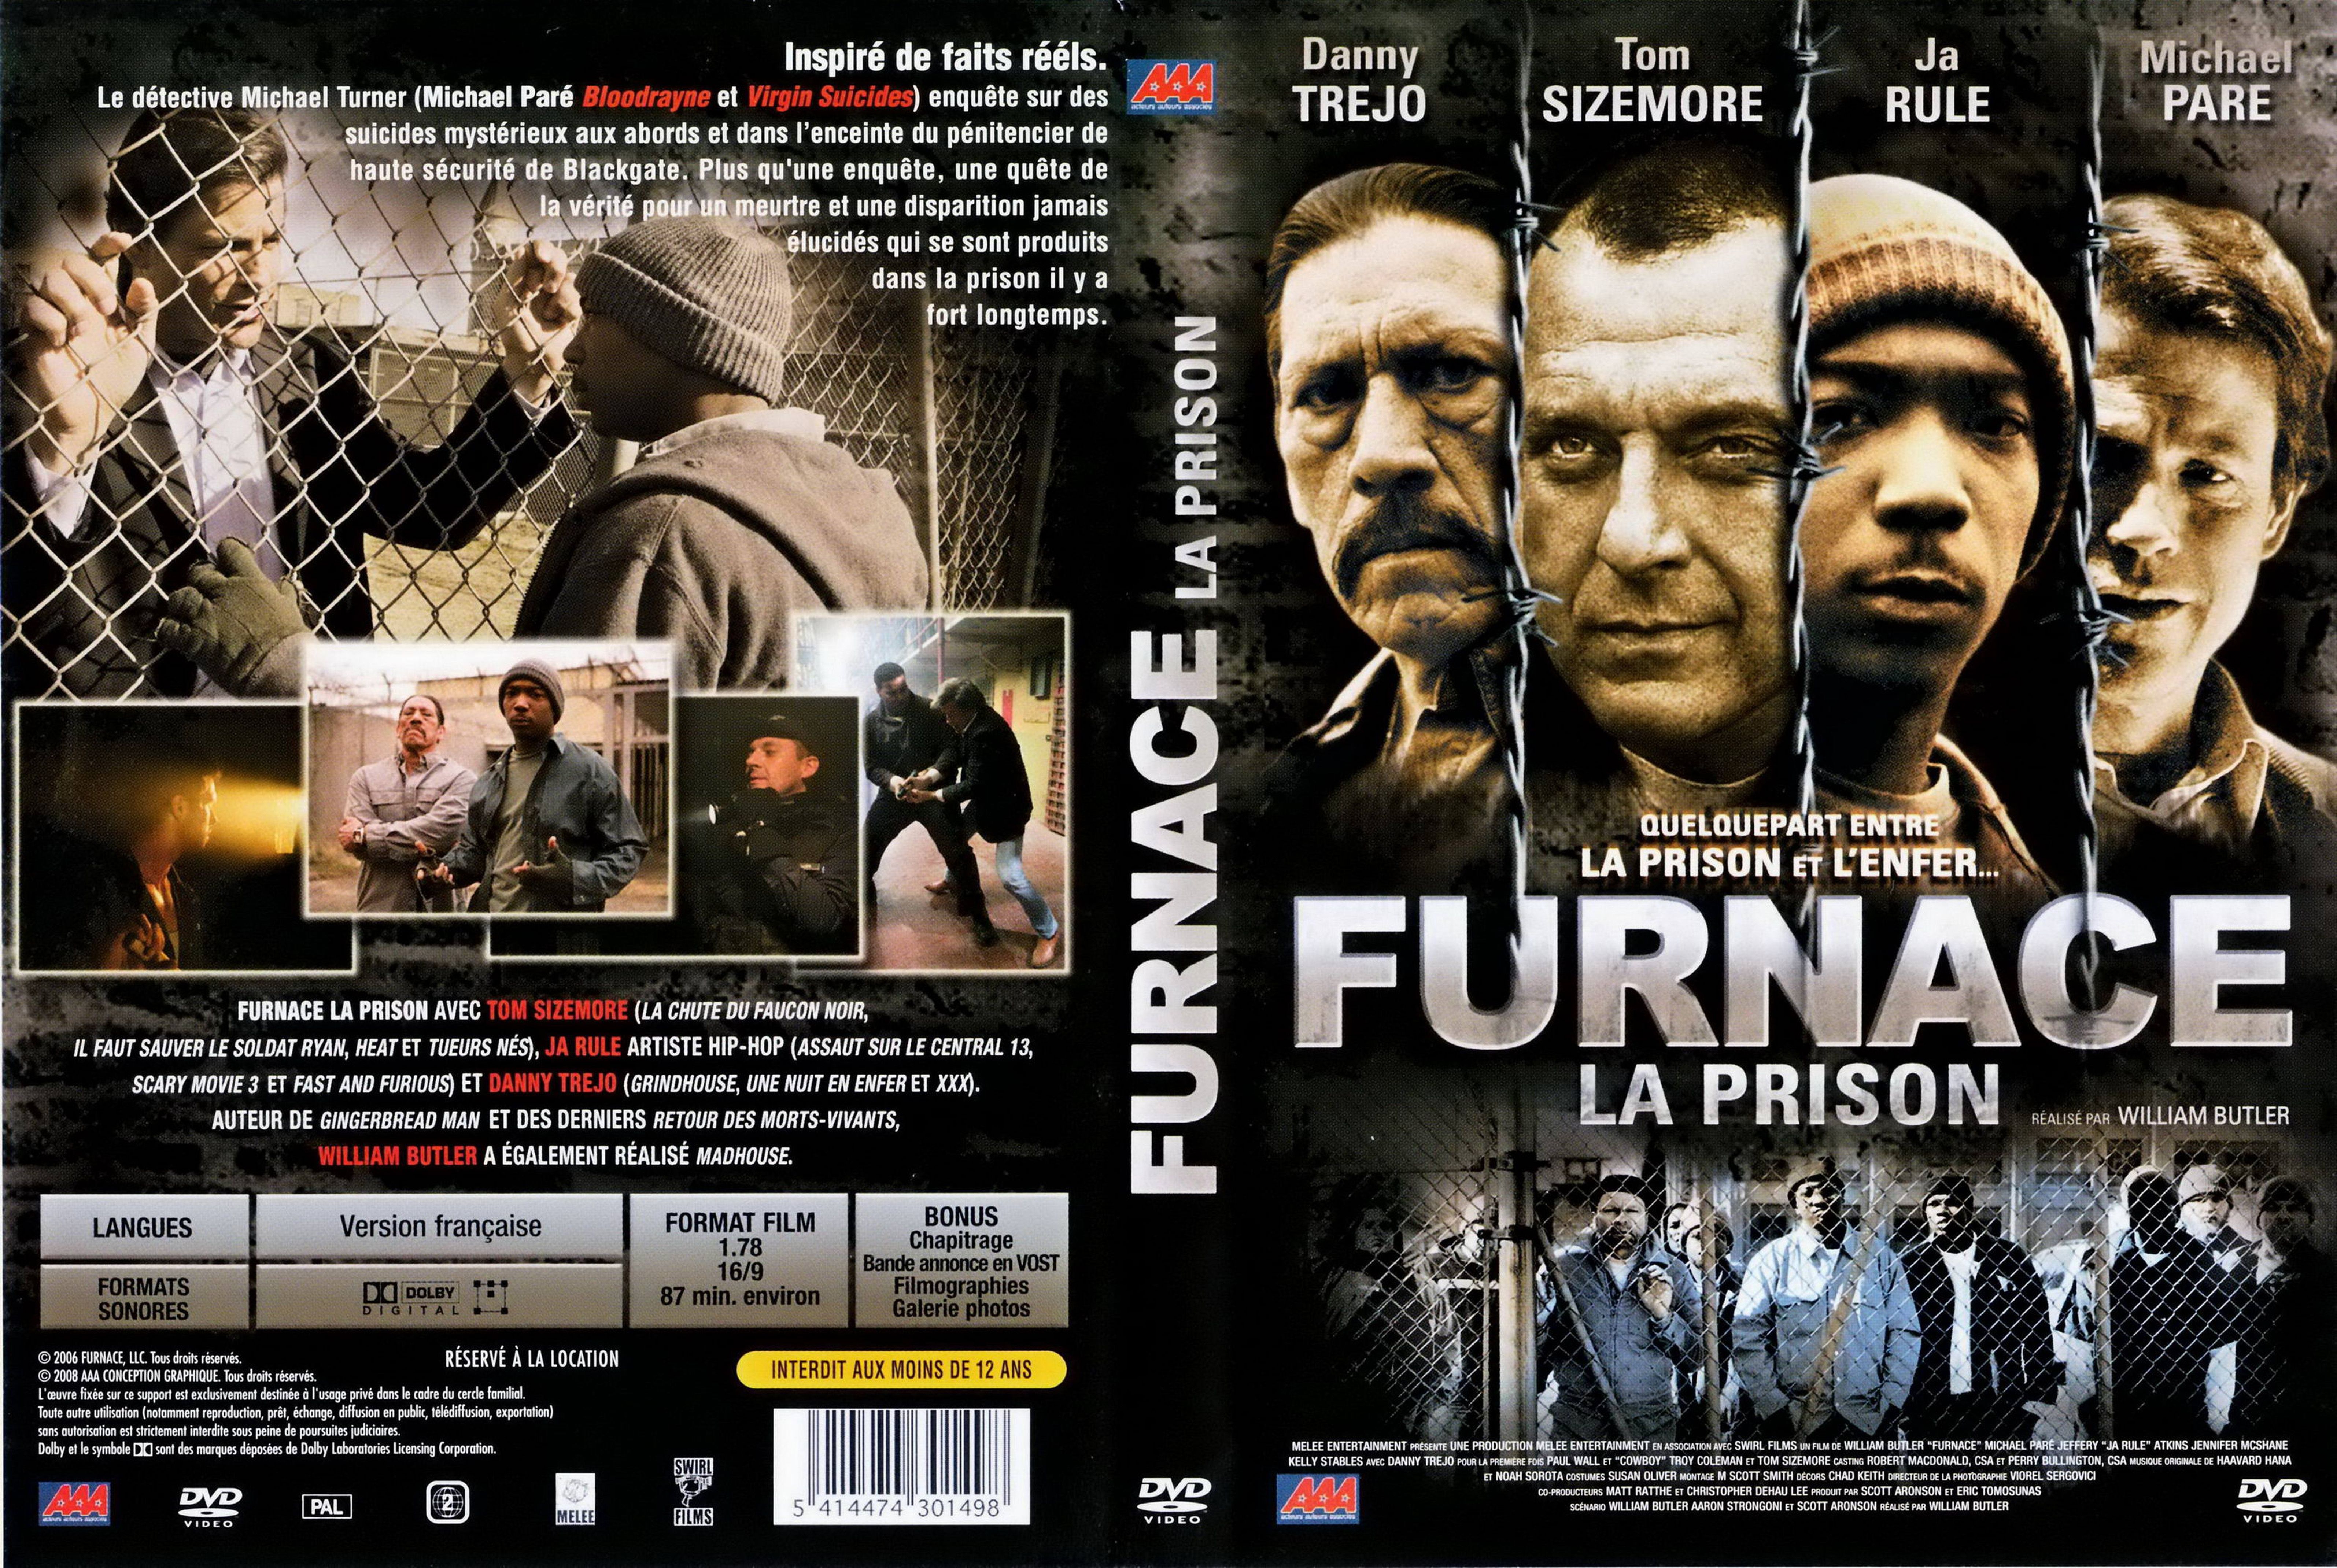 Jaquette DVD Furnace